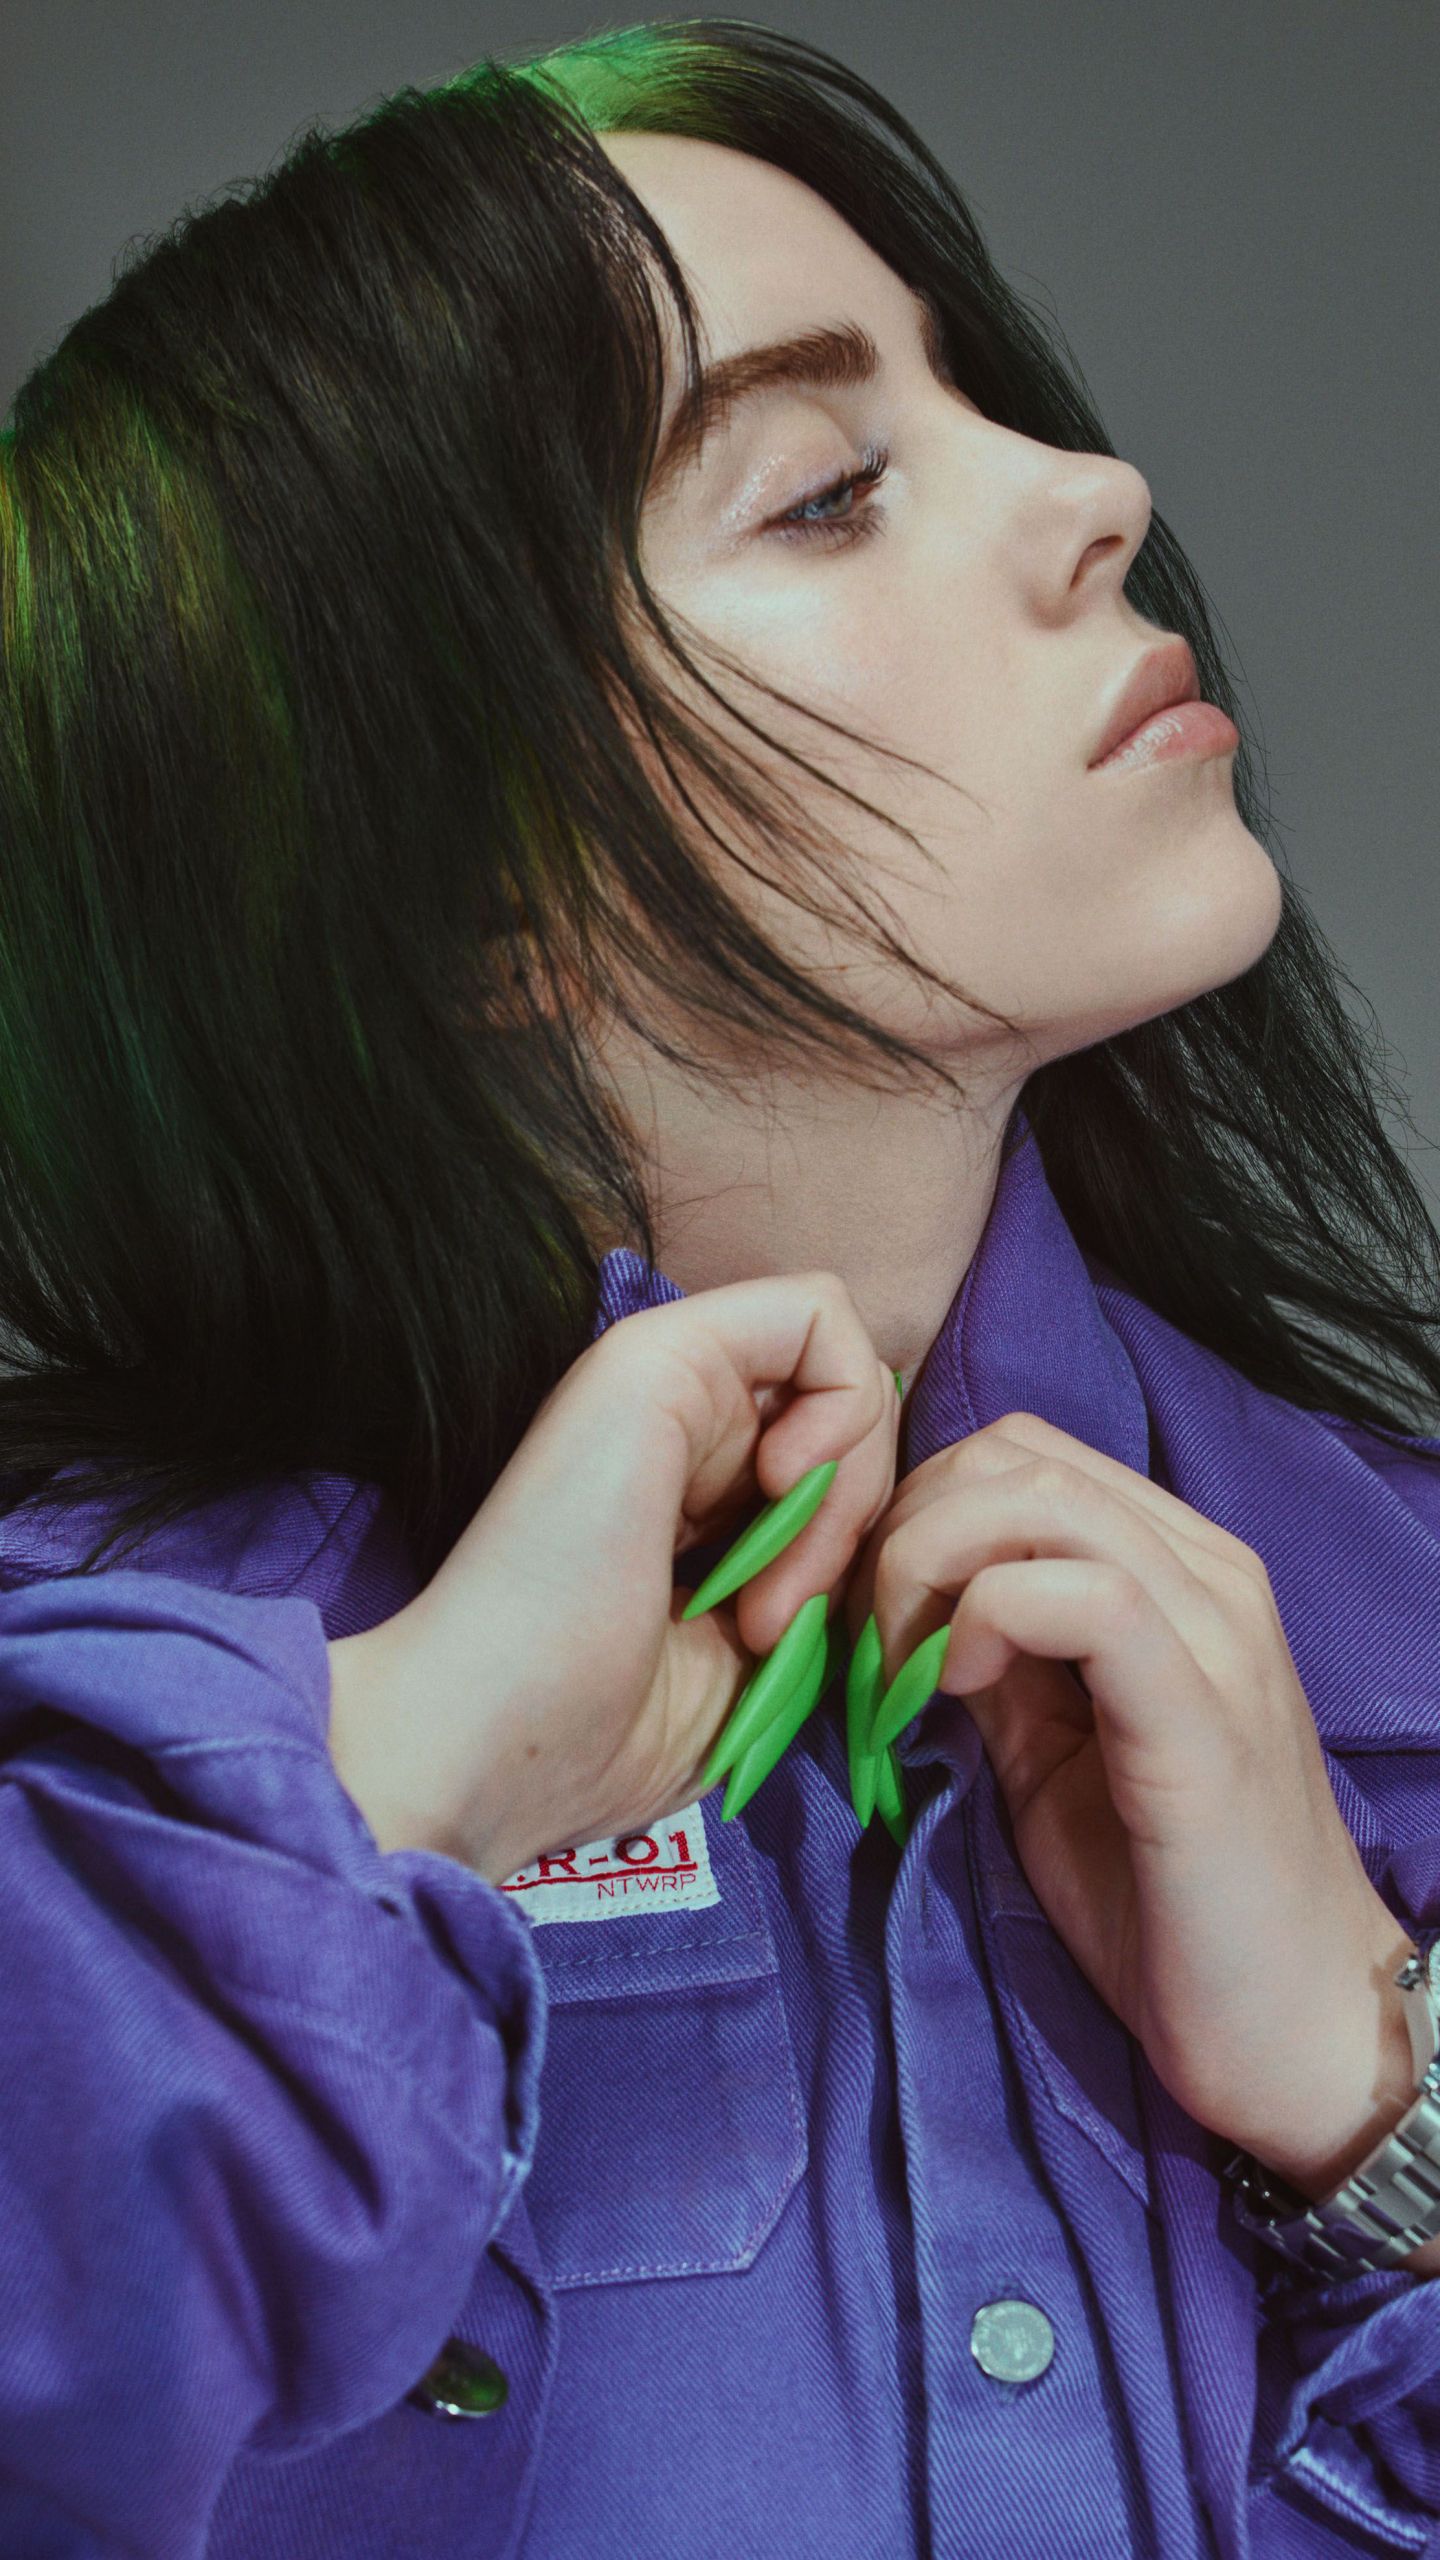 Billie Eilish Green Hair Wallpapers - Wallpaper Cave